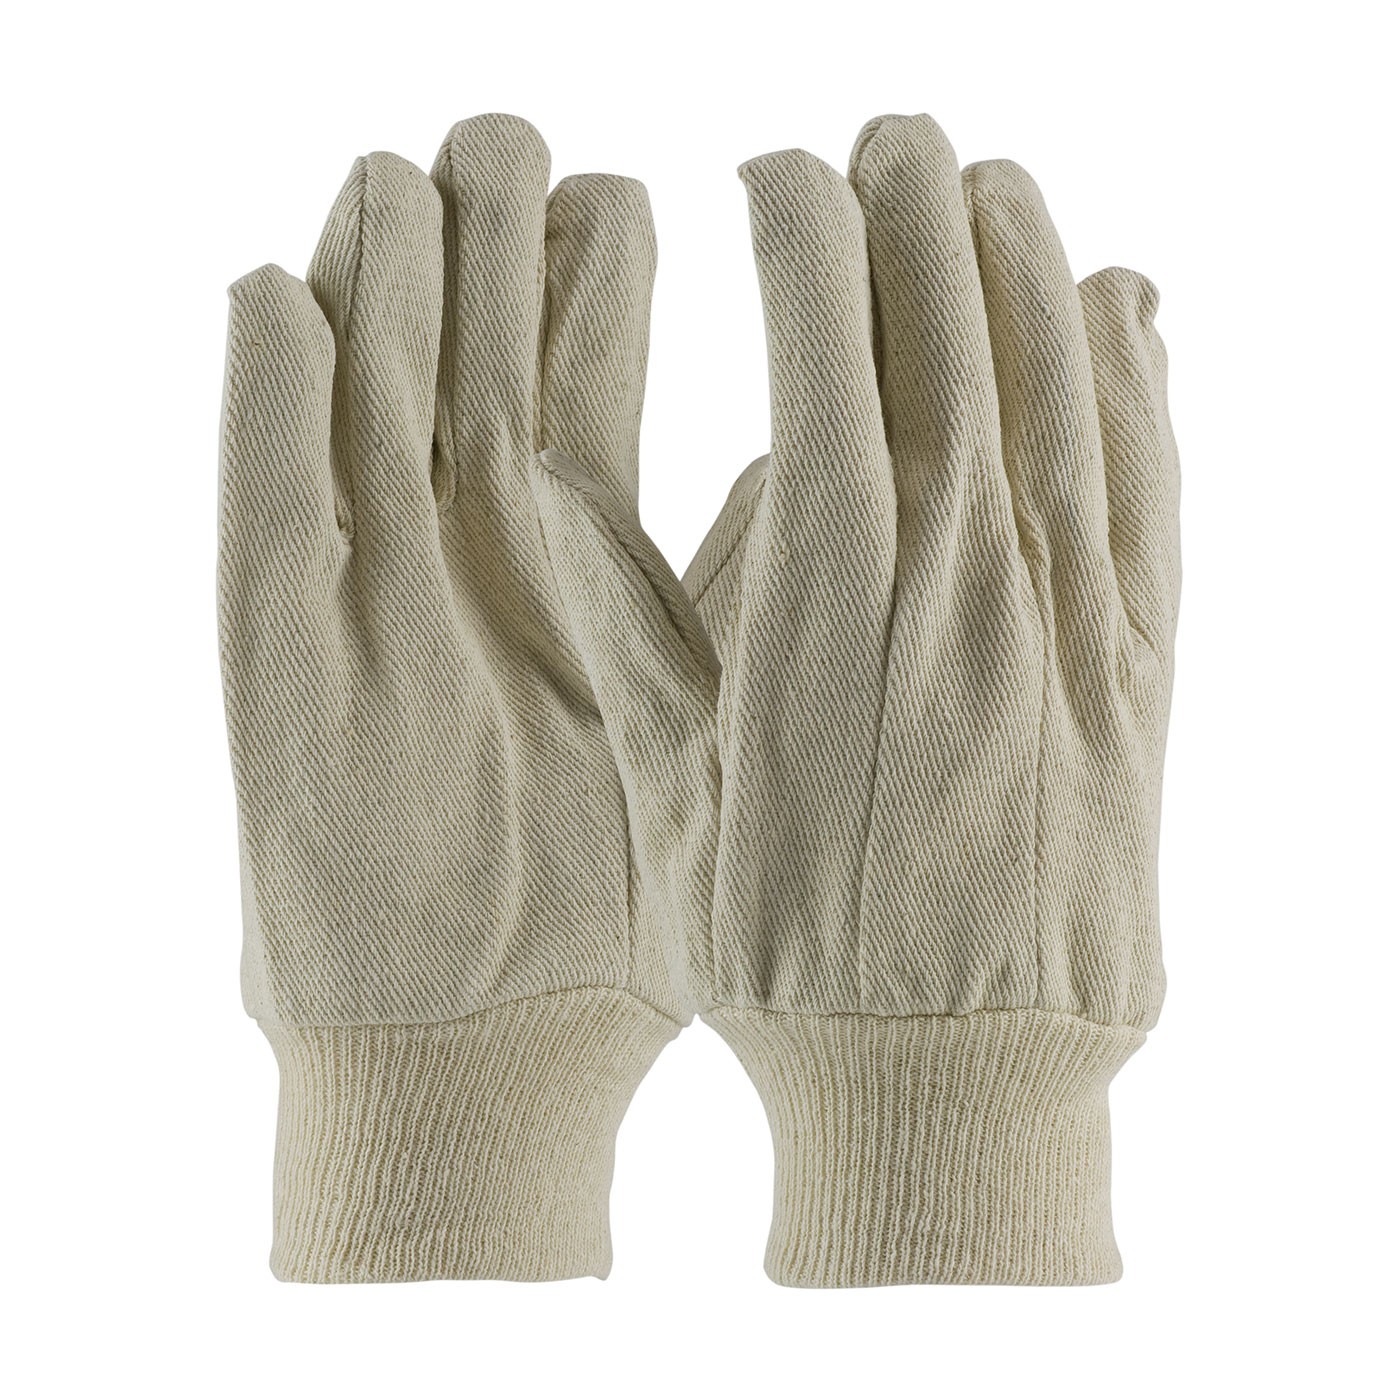 PIP® Economy Grade Cotton Canvas Single Palm Glove - Knitwrist  (#90-910I)